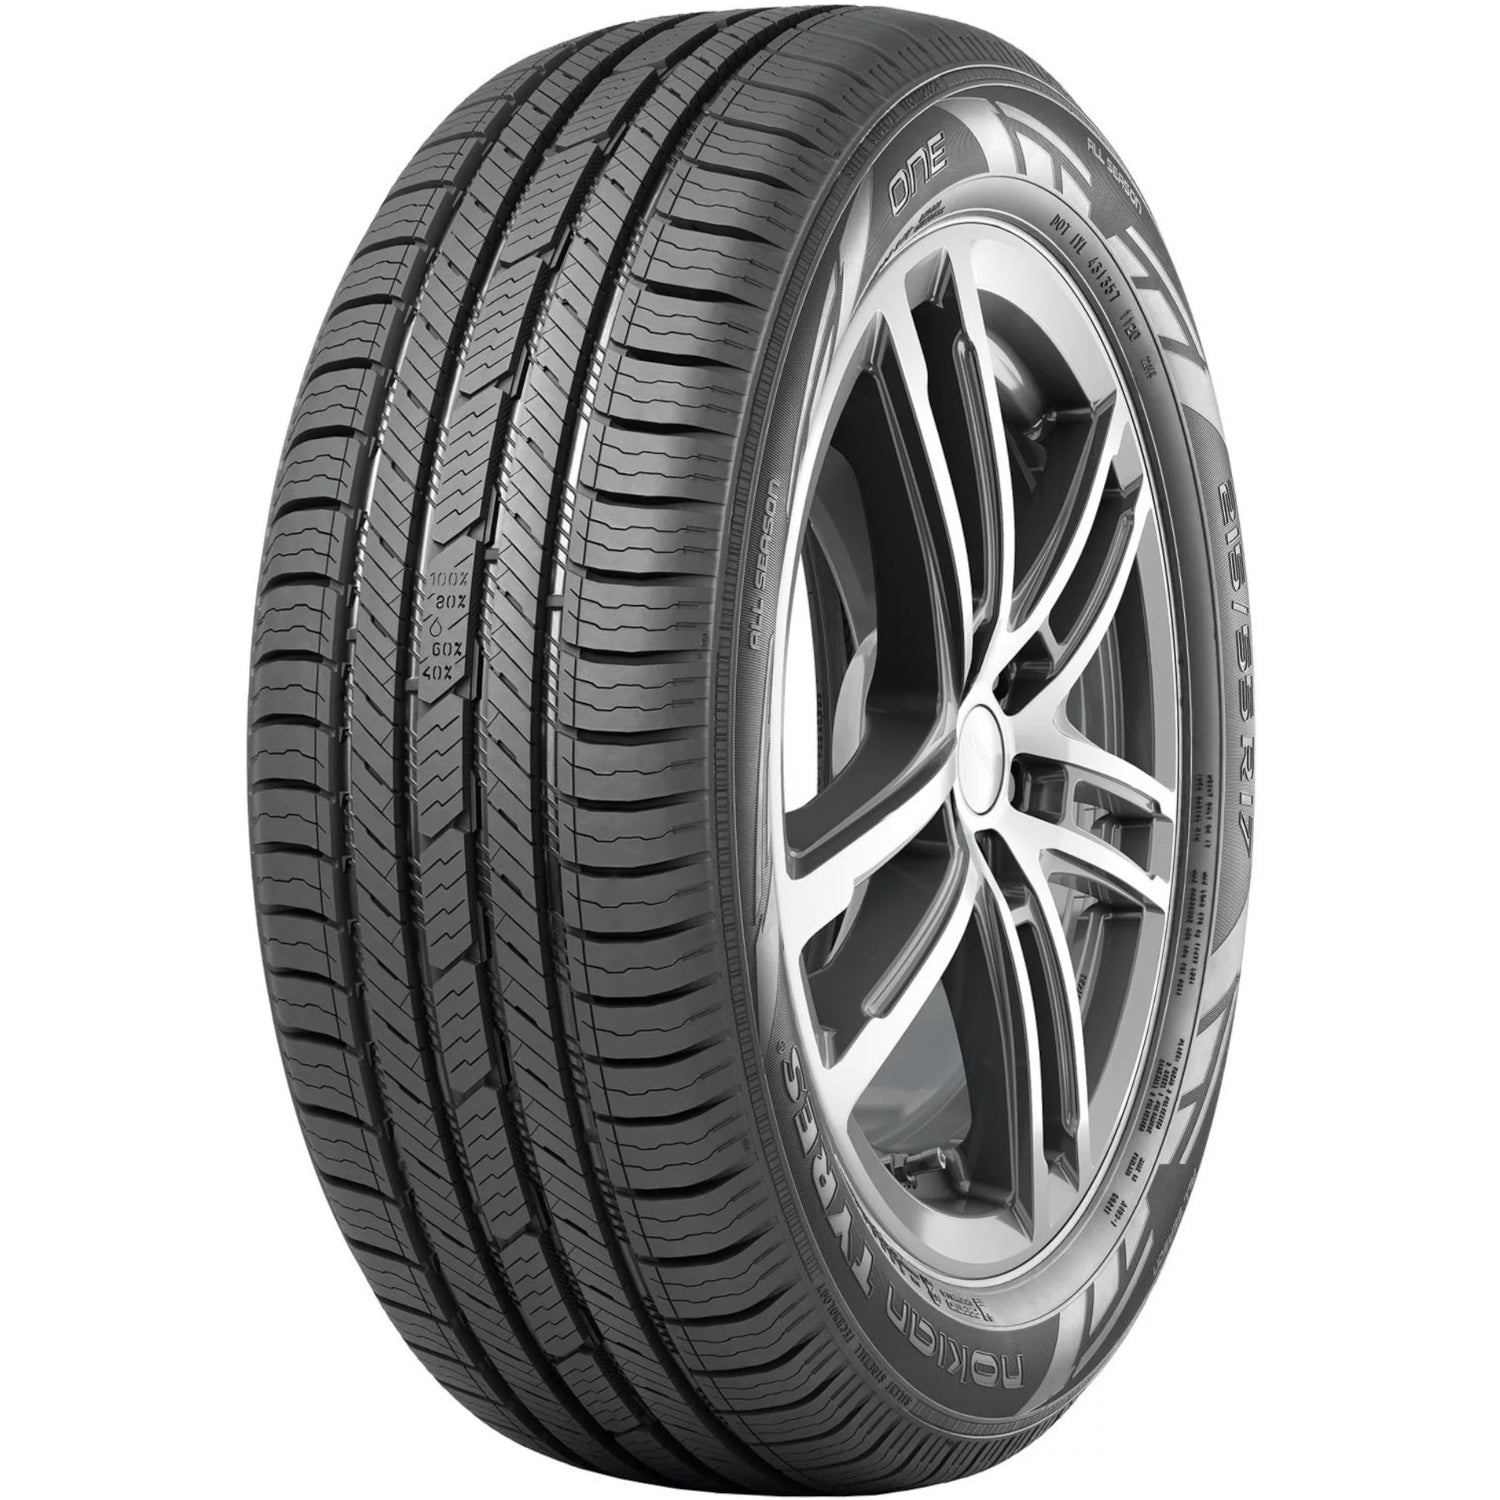 NOKIAN ONE 195/60R15 (24.2X7.7R 15) Tires